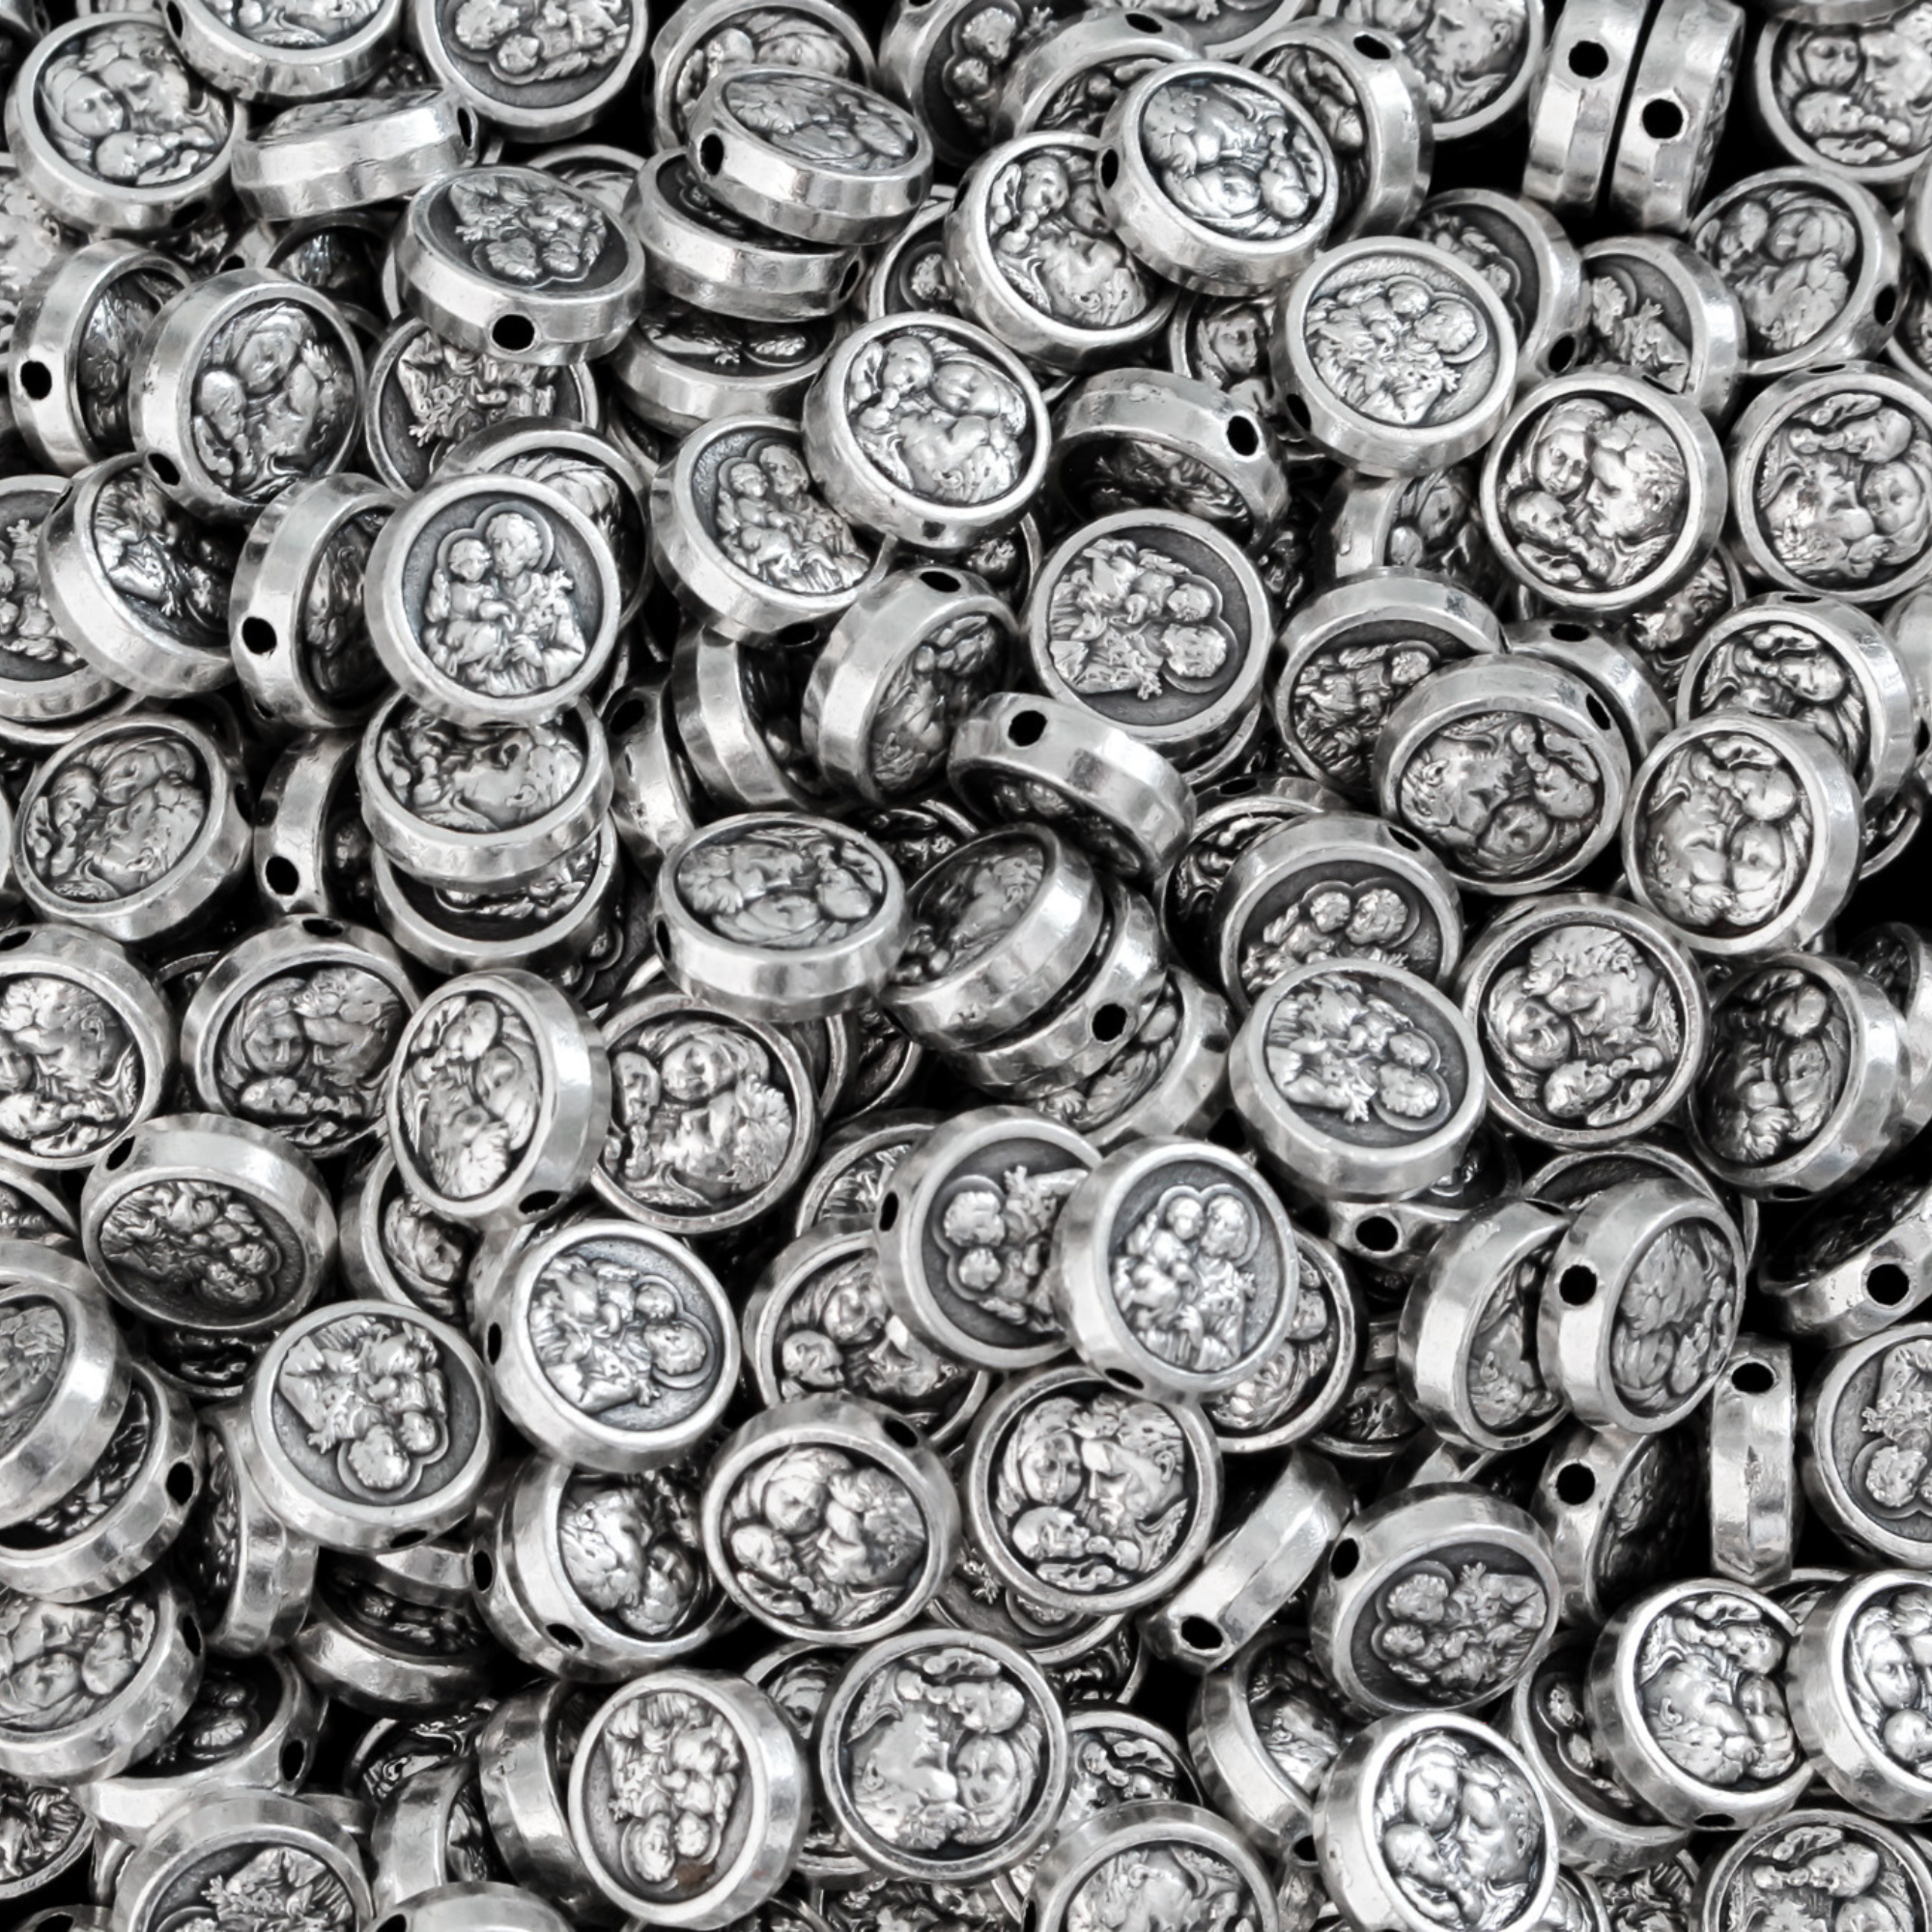 60 Saint Joseph Holy Family Metal Spacer Beads - 9.5mm in diameter 60pcs